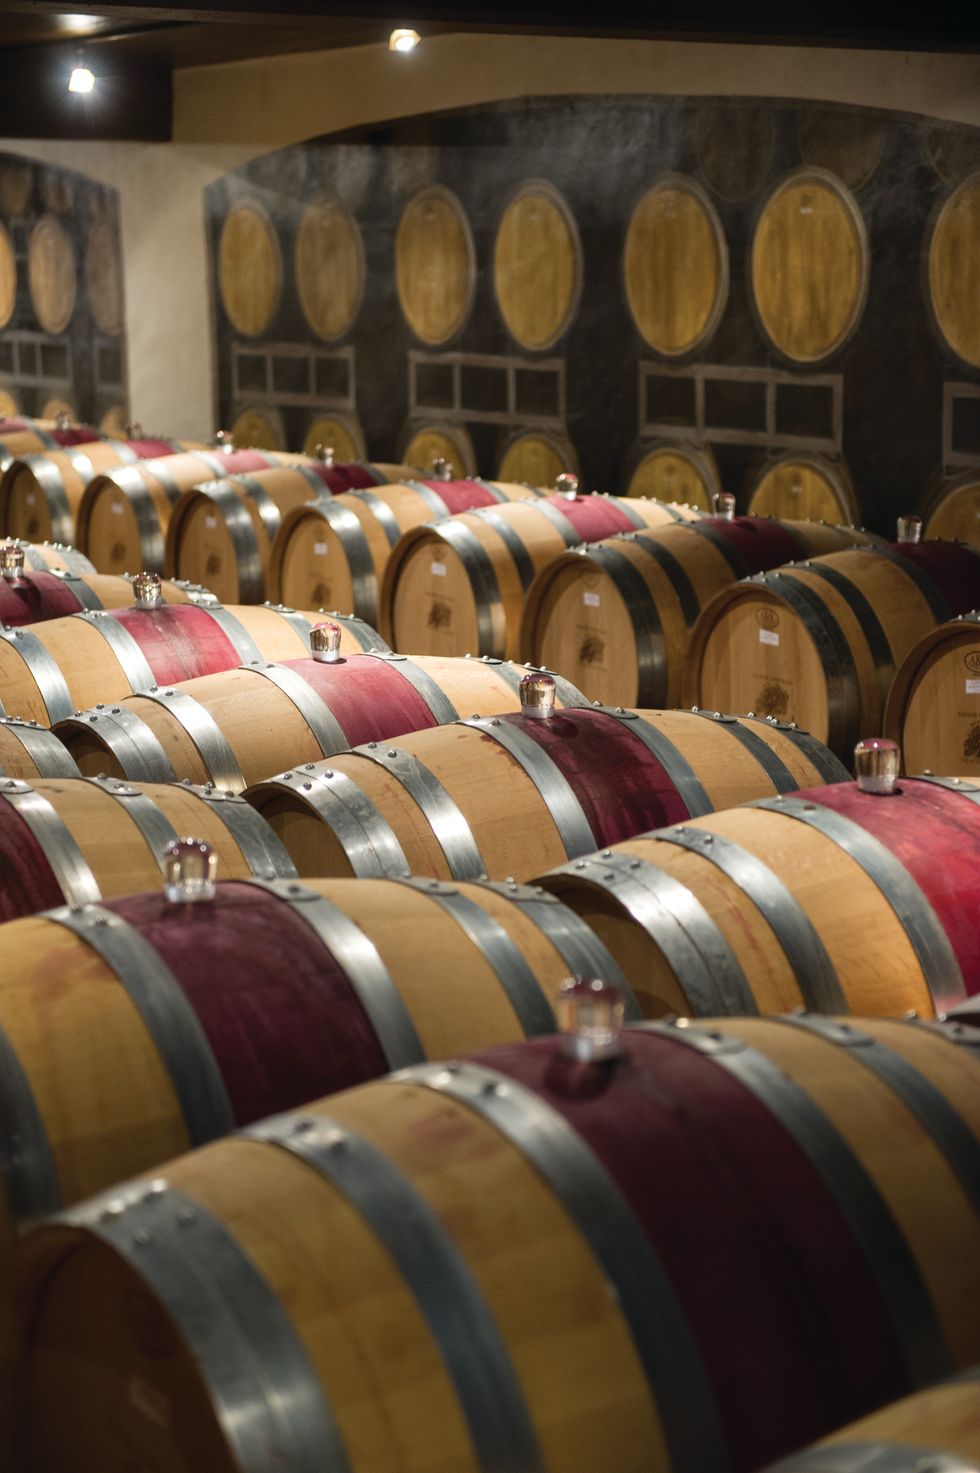 Becker Vineyards, one of 40-plus wineries in the region